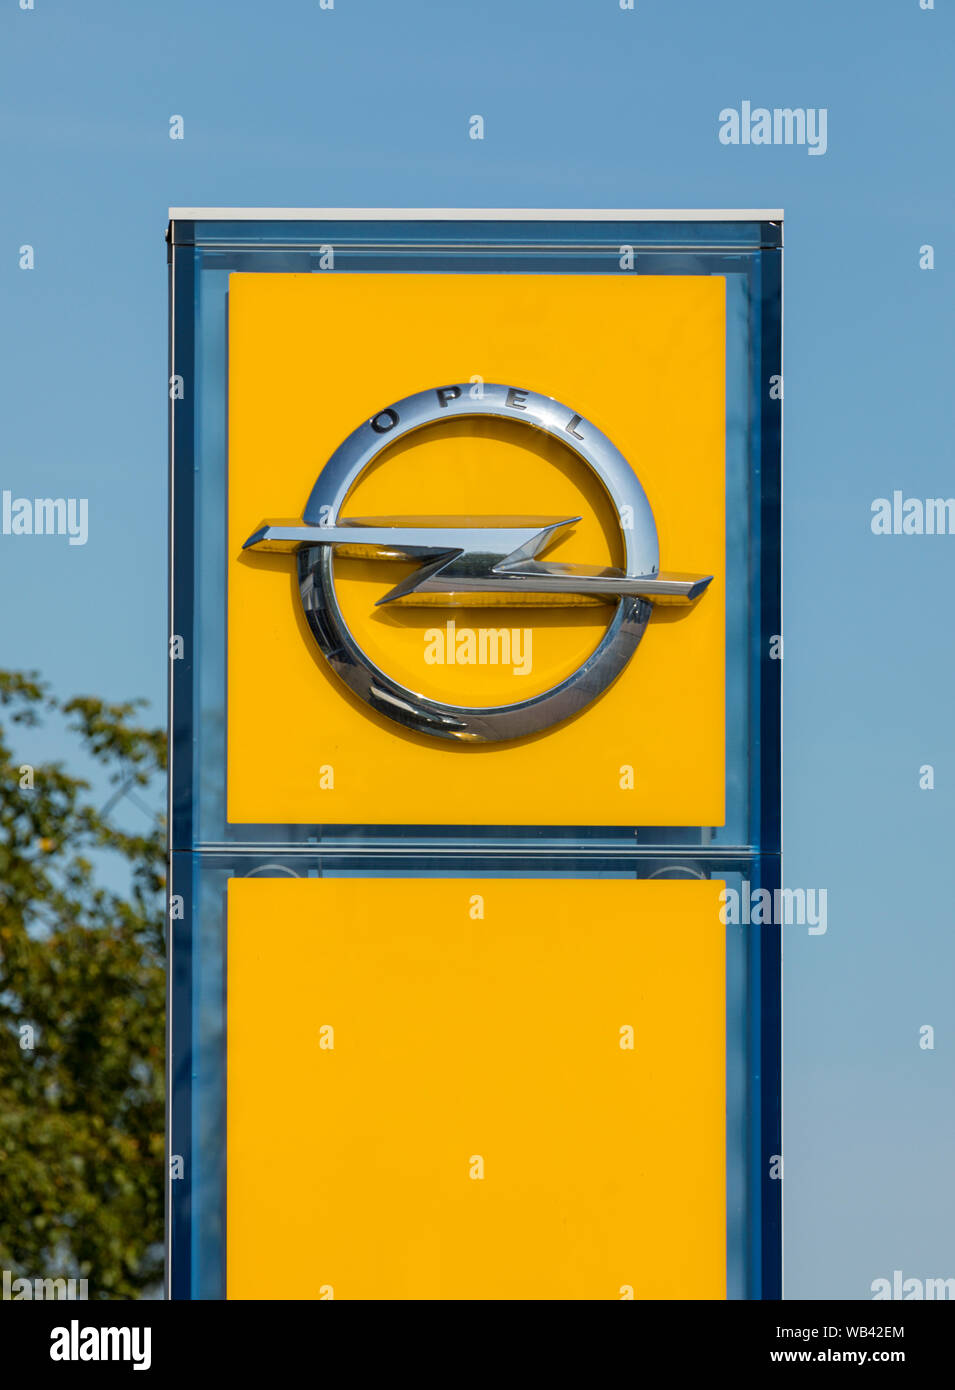 Stade, Germany - August 22, 2019: Signage on pole identifying OPEL cars dealership. Stock Photo